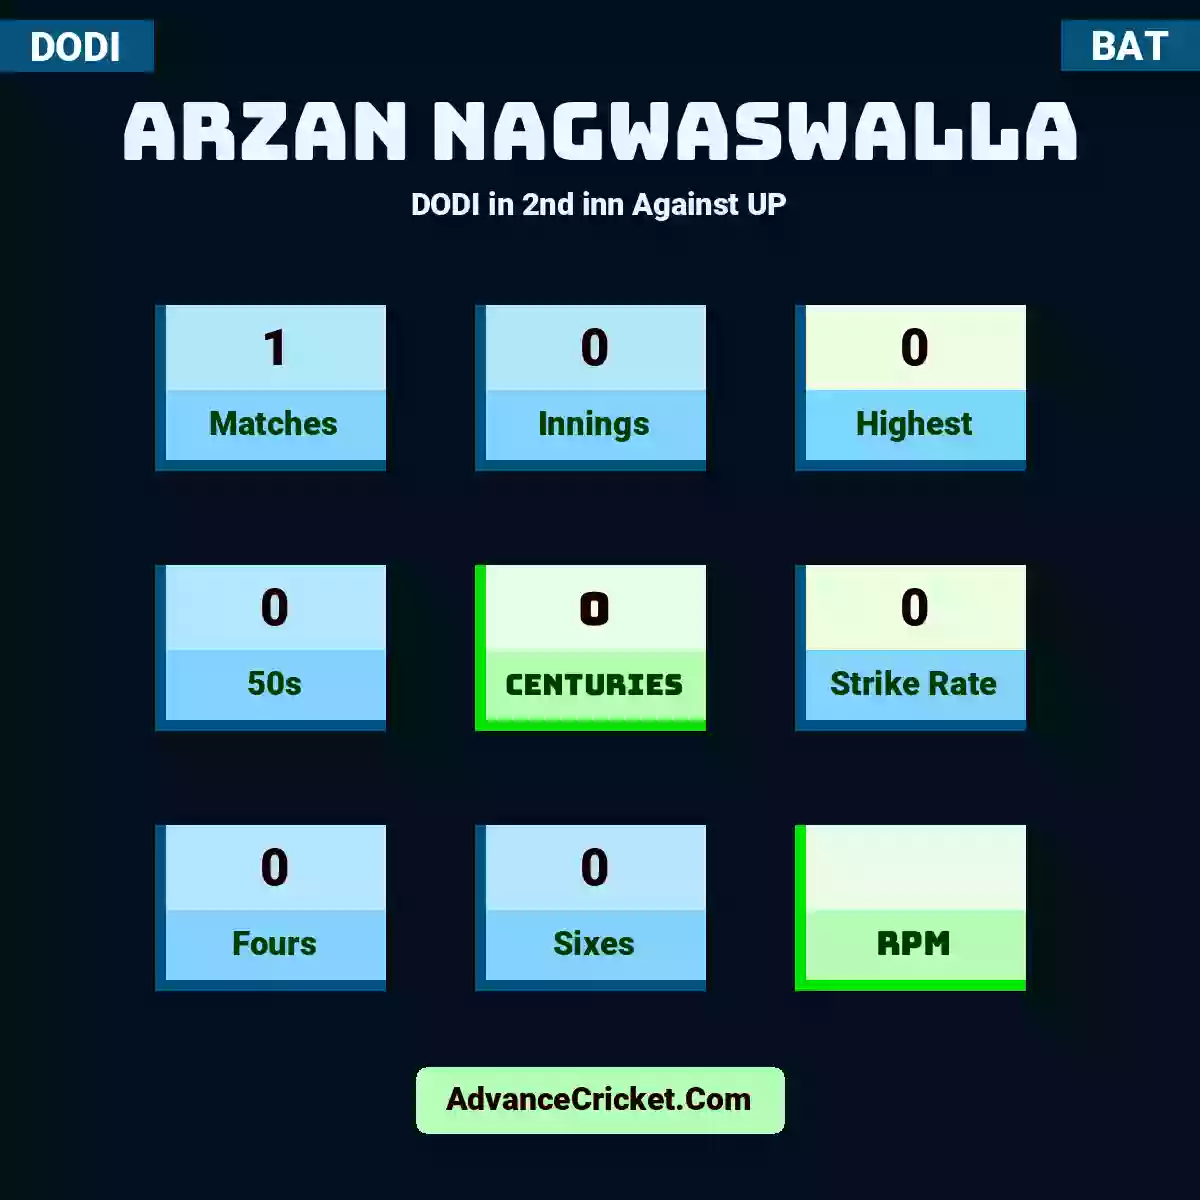 Arzan Nagwaswalla DODI  in 2nd inn Against UP, Arzan Nagwaswalla played 1 matches, scored 0 runs as highest, 0 half-centuries, and 0 centuries, with a strike rate of 0. A.Nagwaswalla hit 0 fours and 0 sixes.